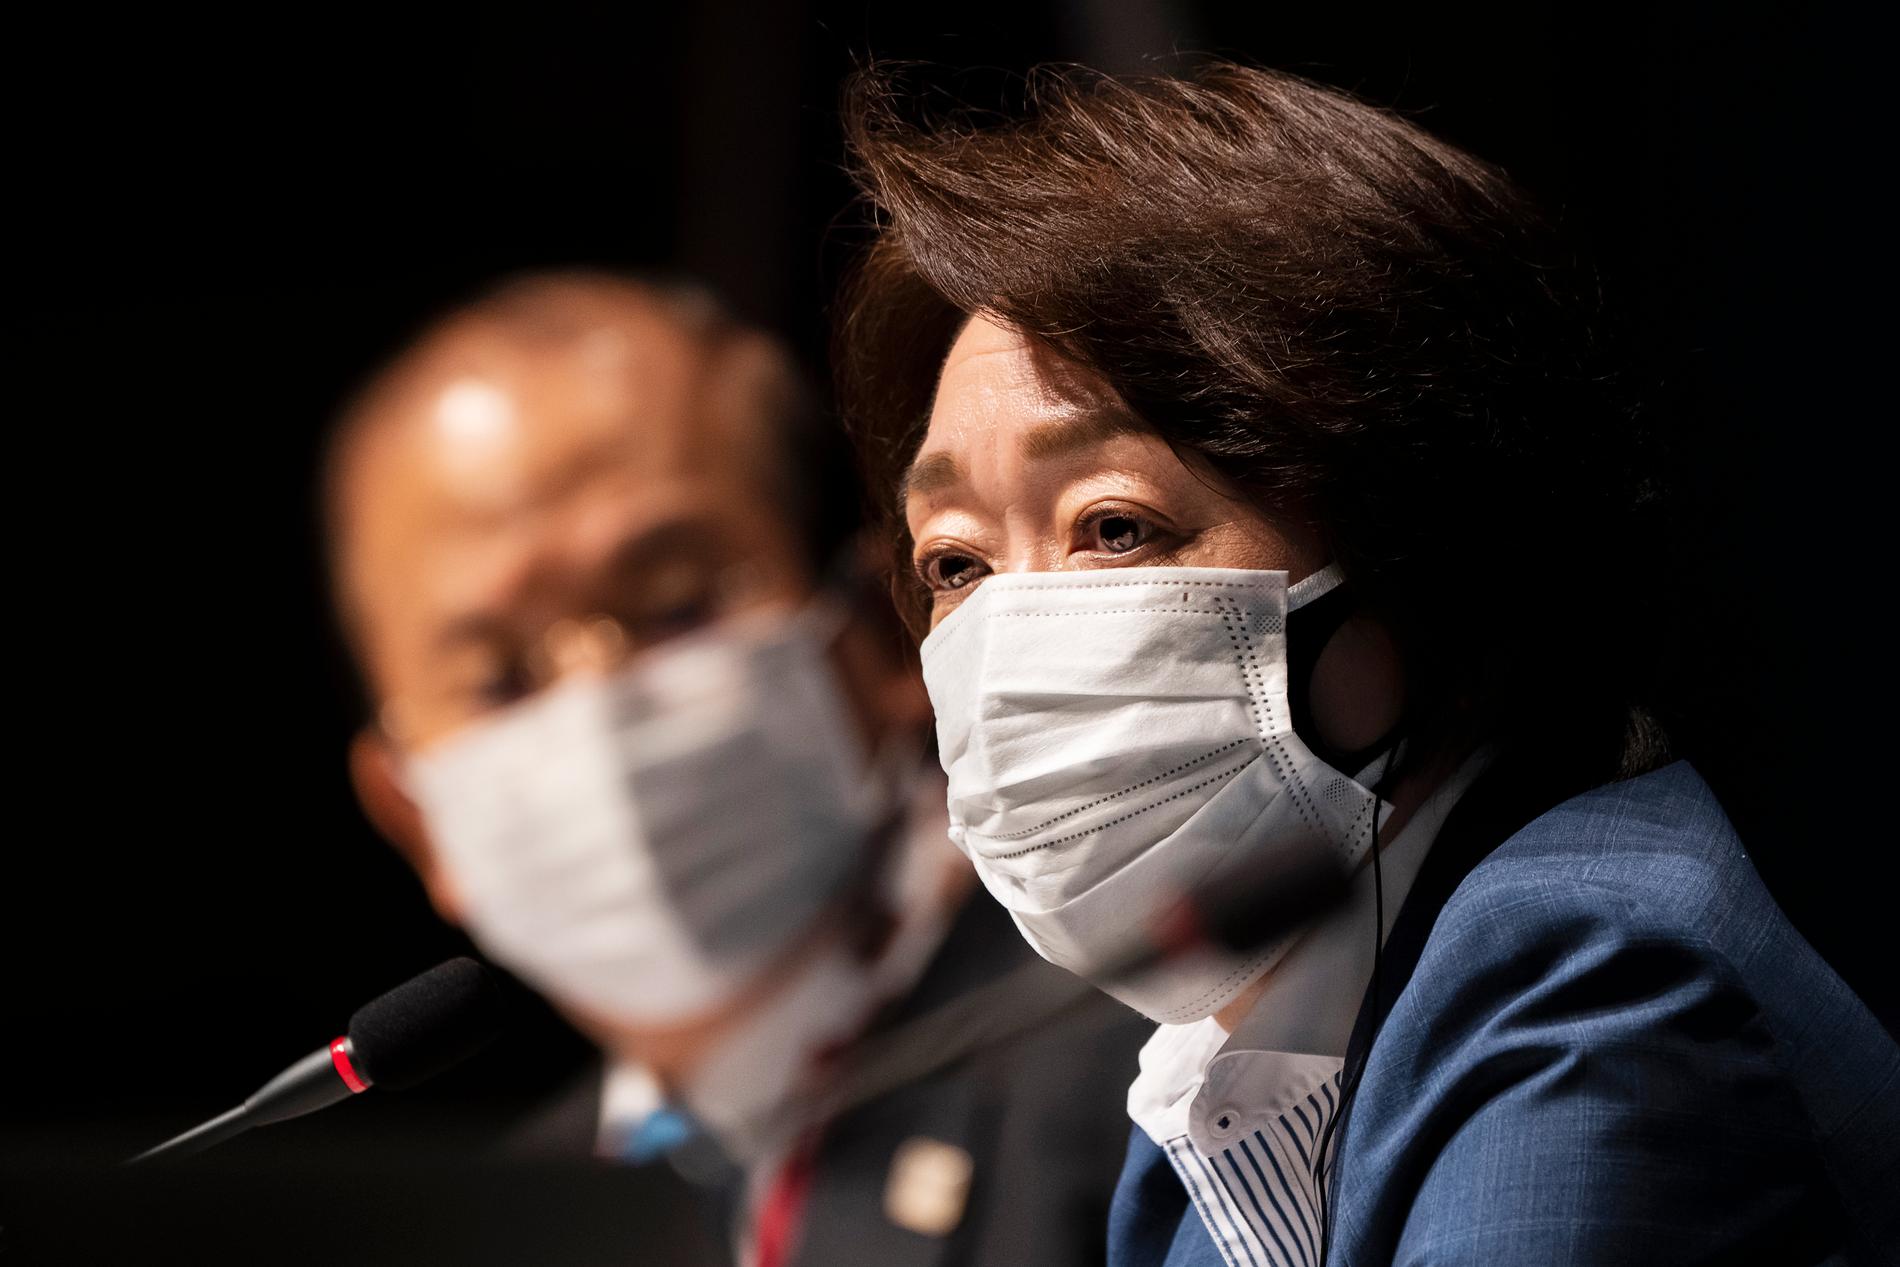 Tokyo 2020-presidenten Seiko Hashimoto under   dagens presskonferens i Tokyo. 